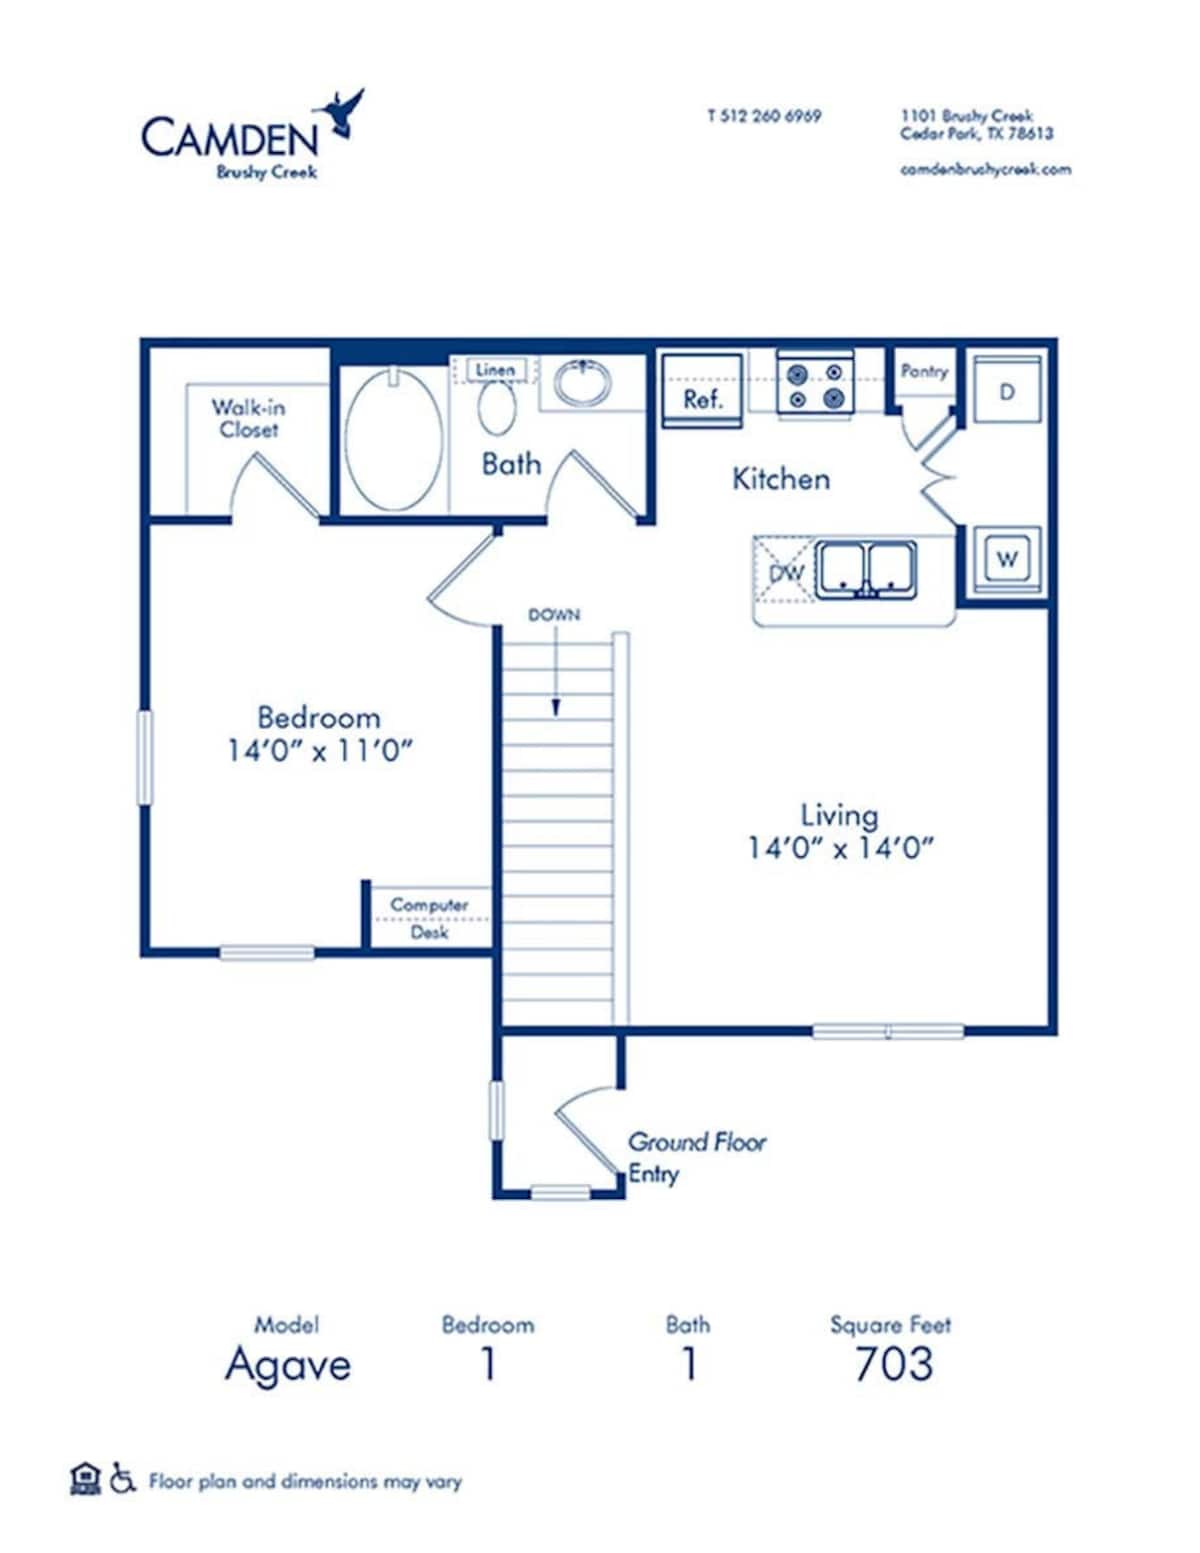 Floorplan diagram for Agave, showing 1 bedroom